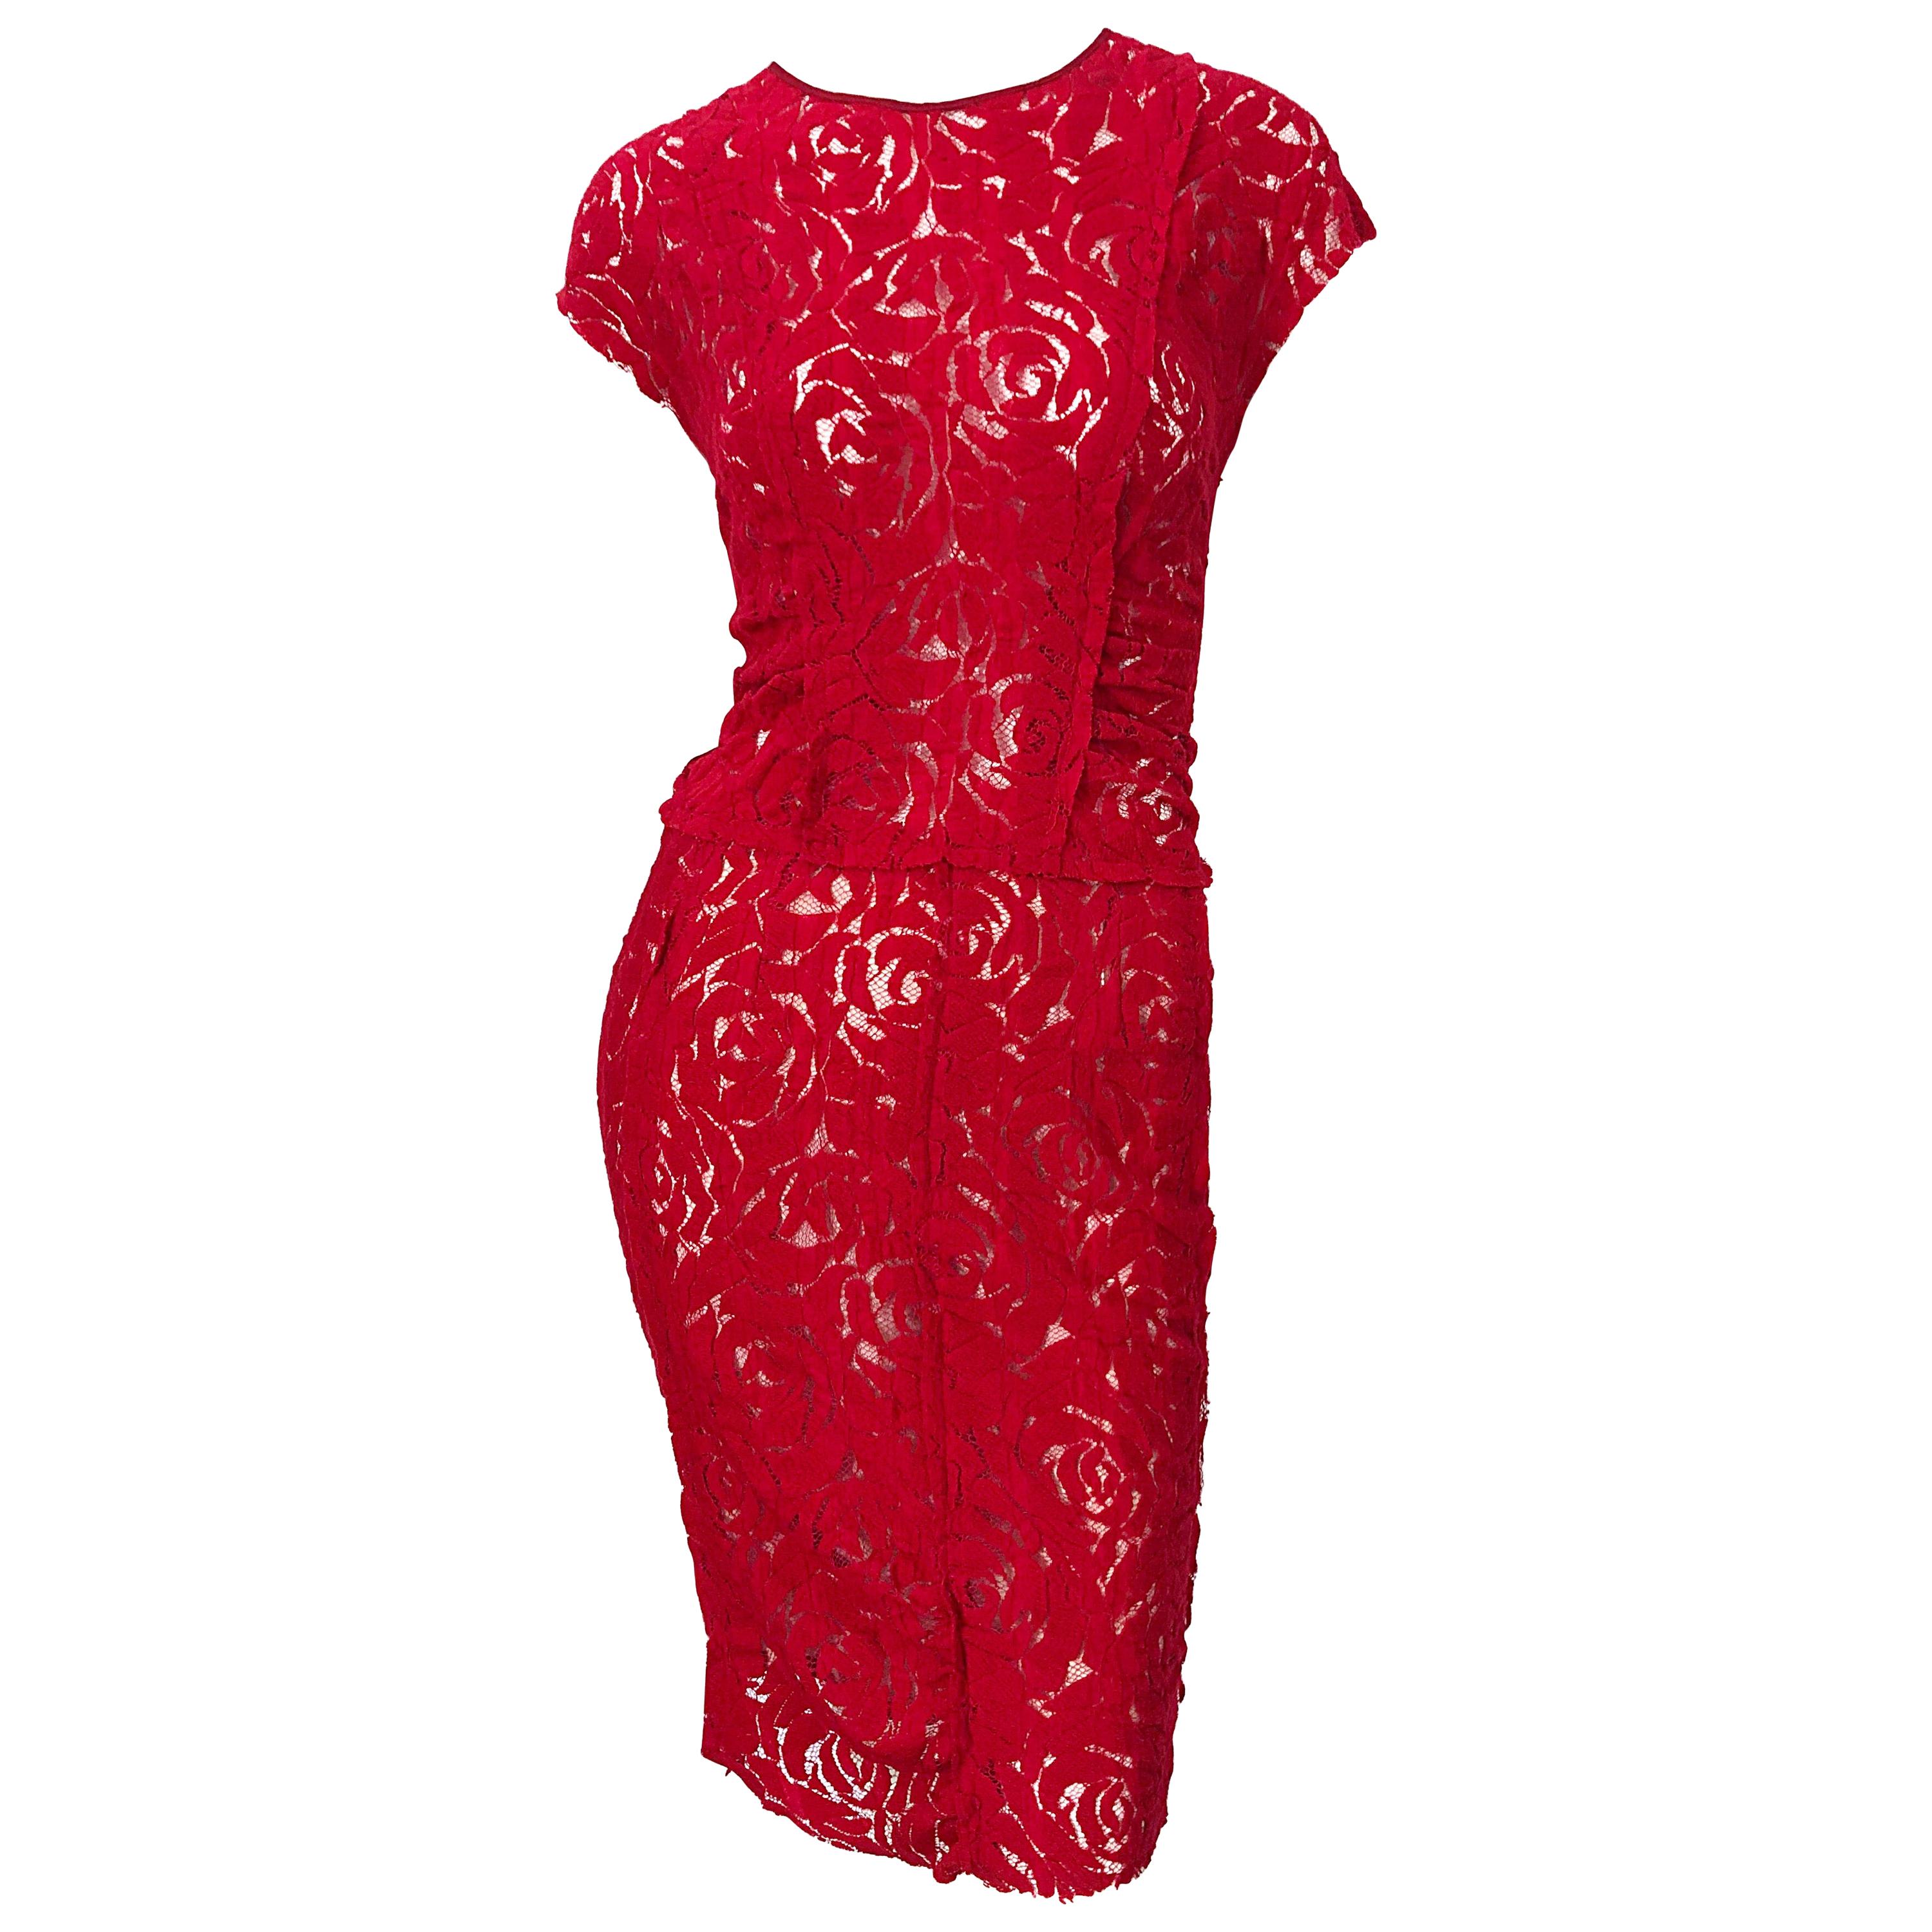 Nina Ricci 2000s Lipstick Red Lace Size 42 ( 8 ) Short Sleeve Vintage Dress For Sale